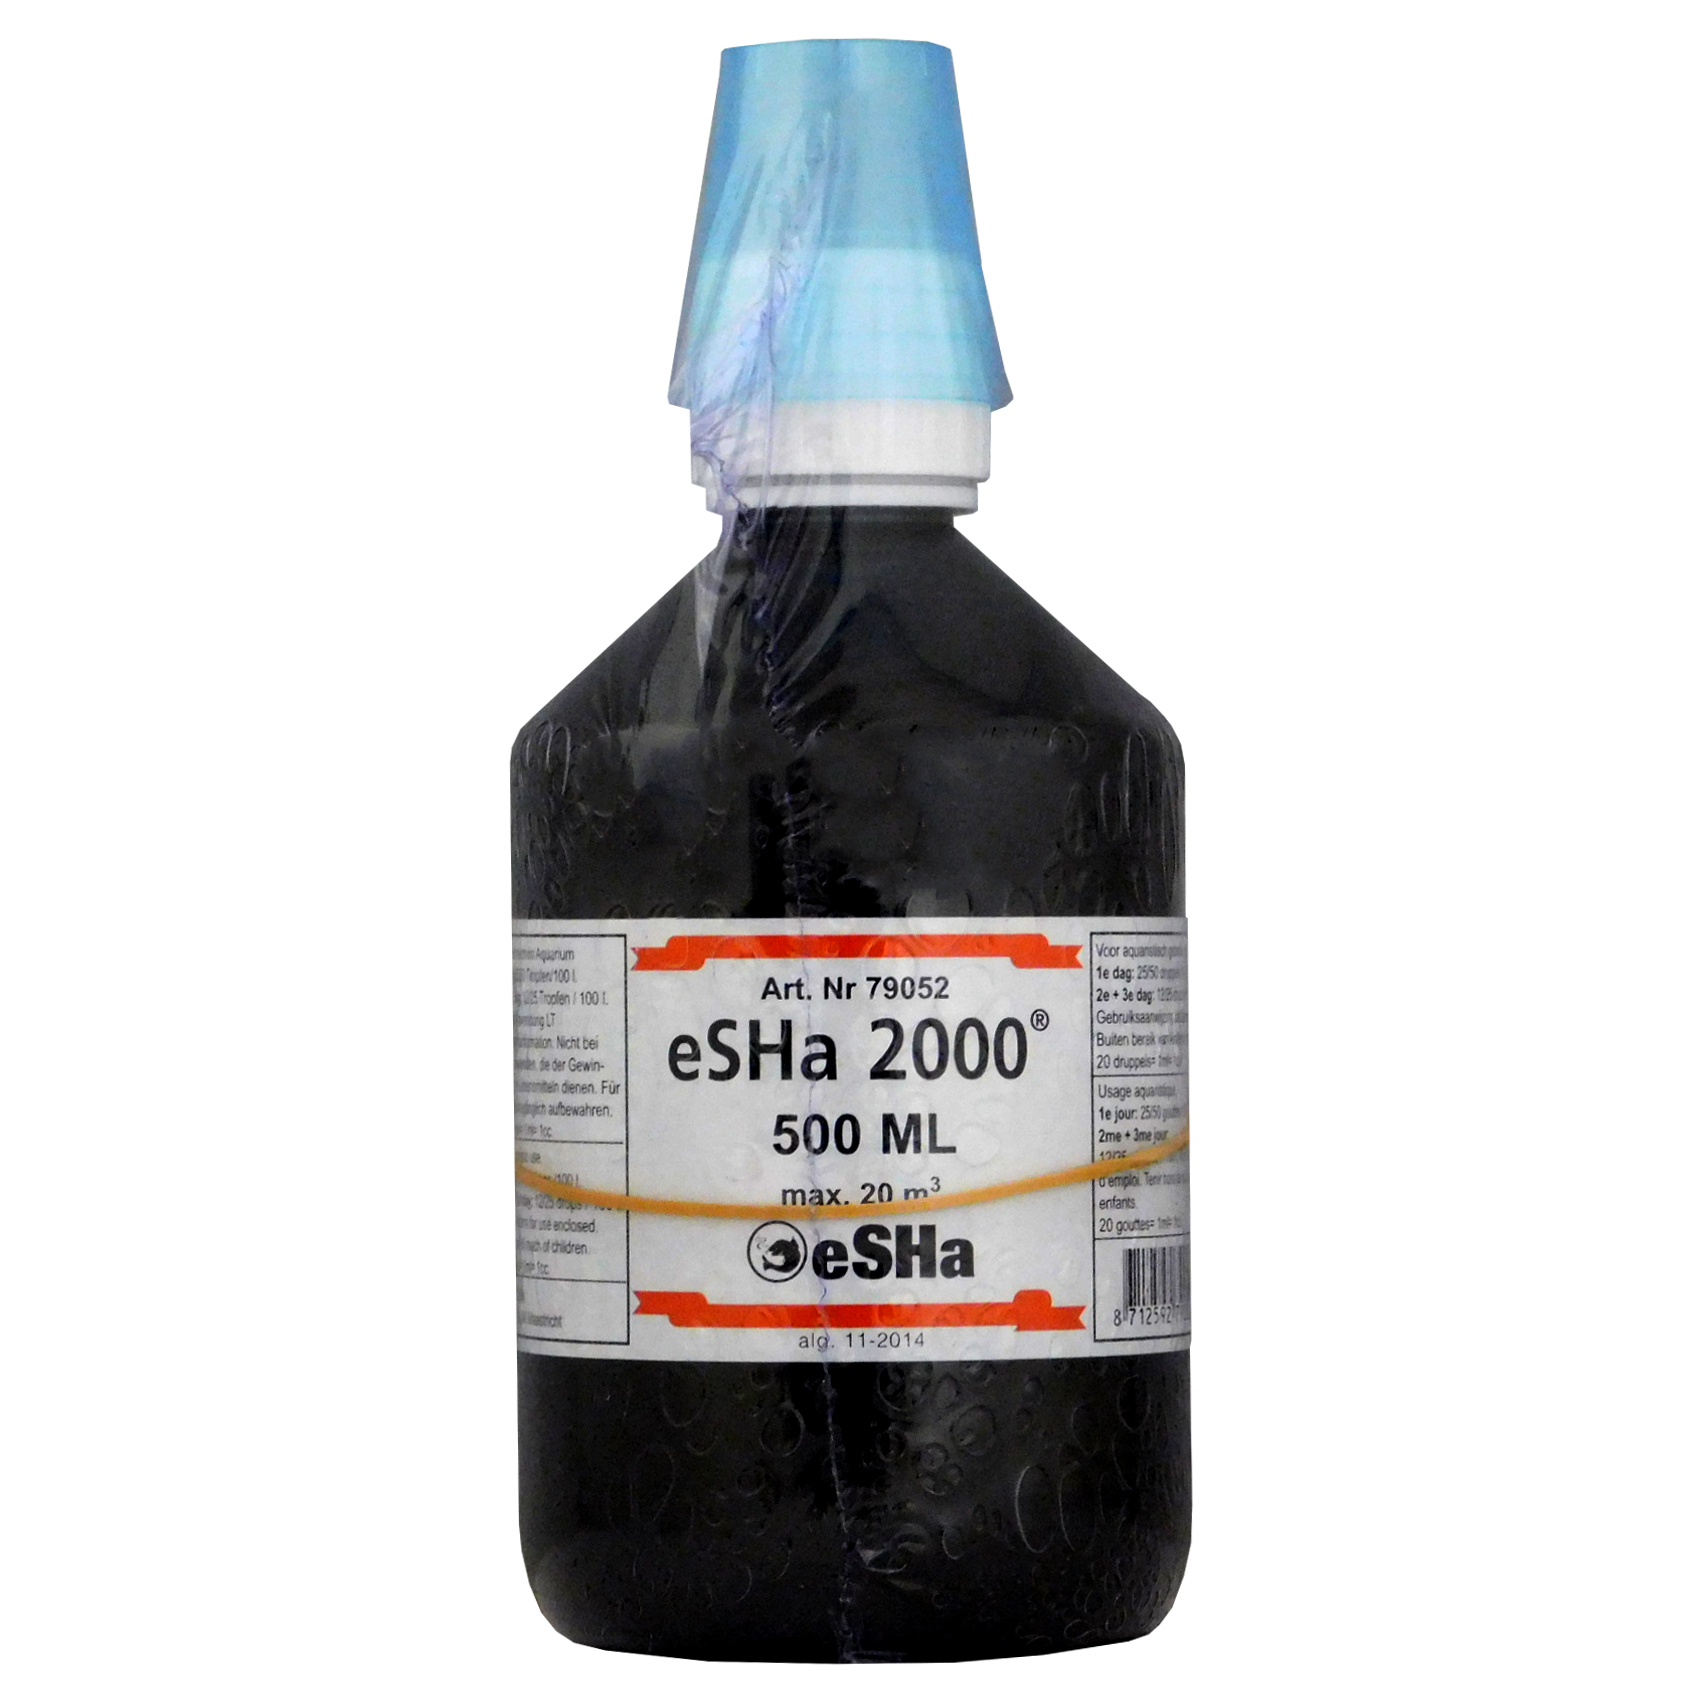 eSHa 2000 – Fungus, Finrot and Bacteria Treatment – Aqua Discus India